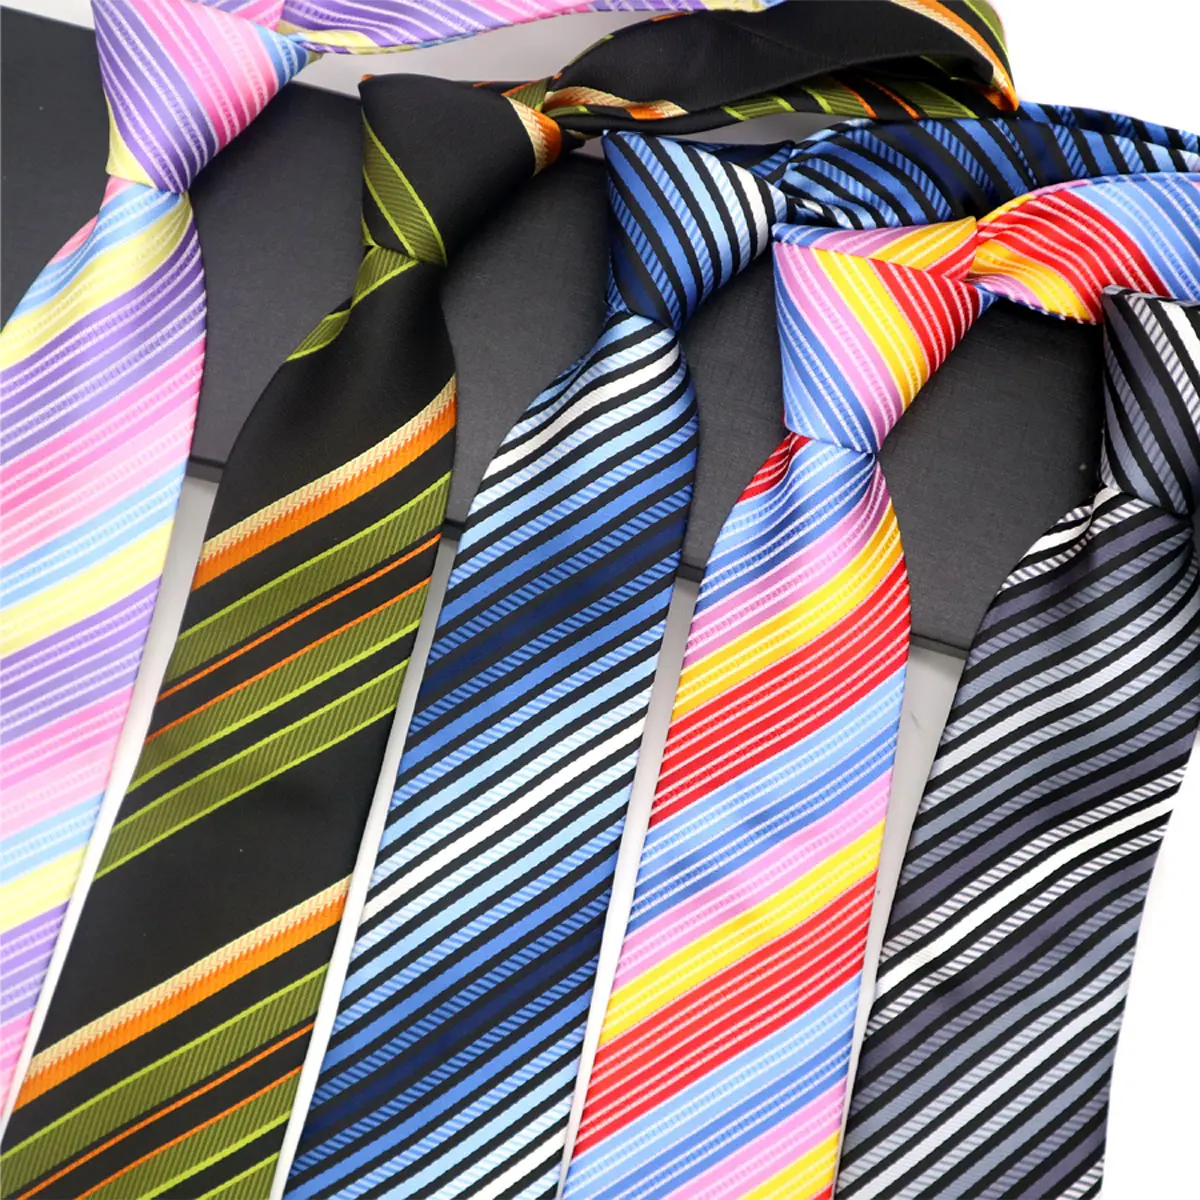 

Luxury Men Tie 8cm Business Formal Ties Striped Stripes Neck Tie Jacquare Woven Shirt Dress Accessories Necktie Neckwear